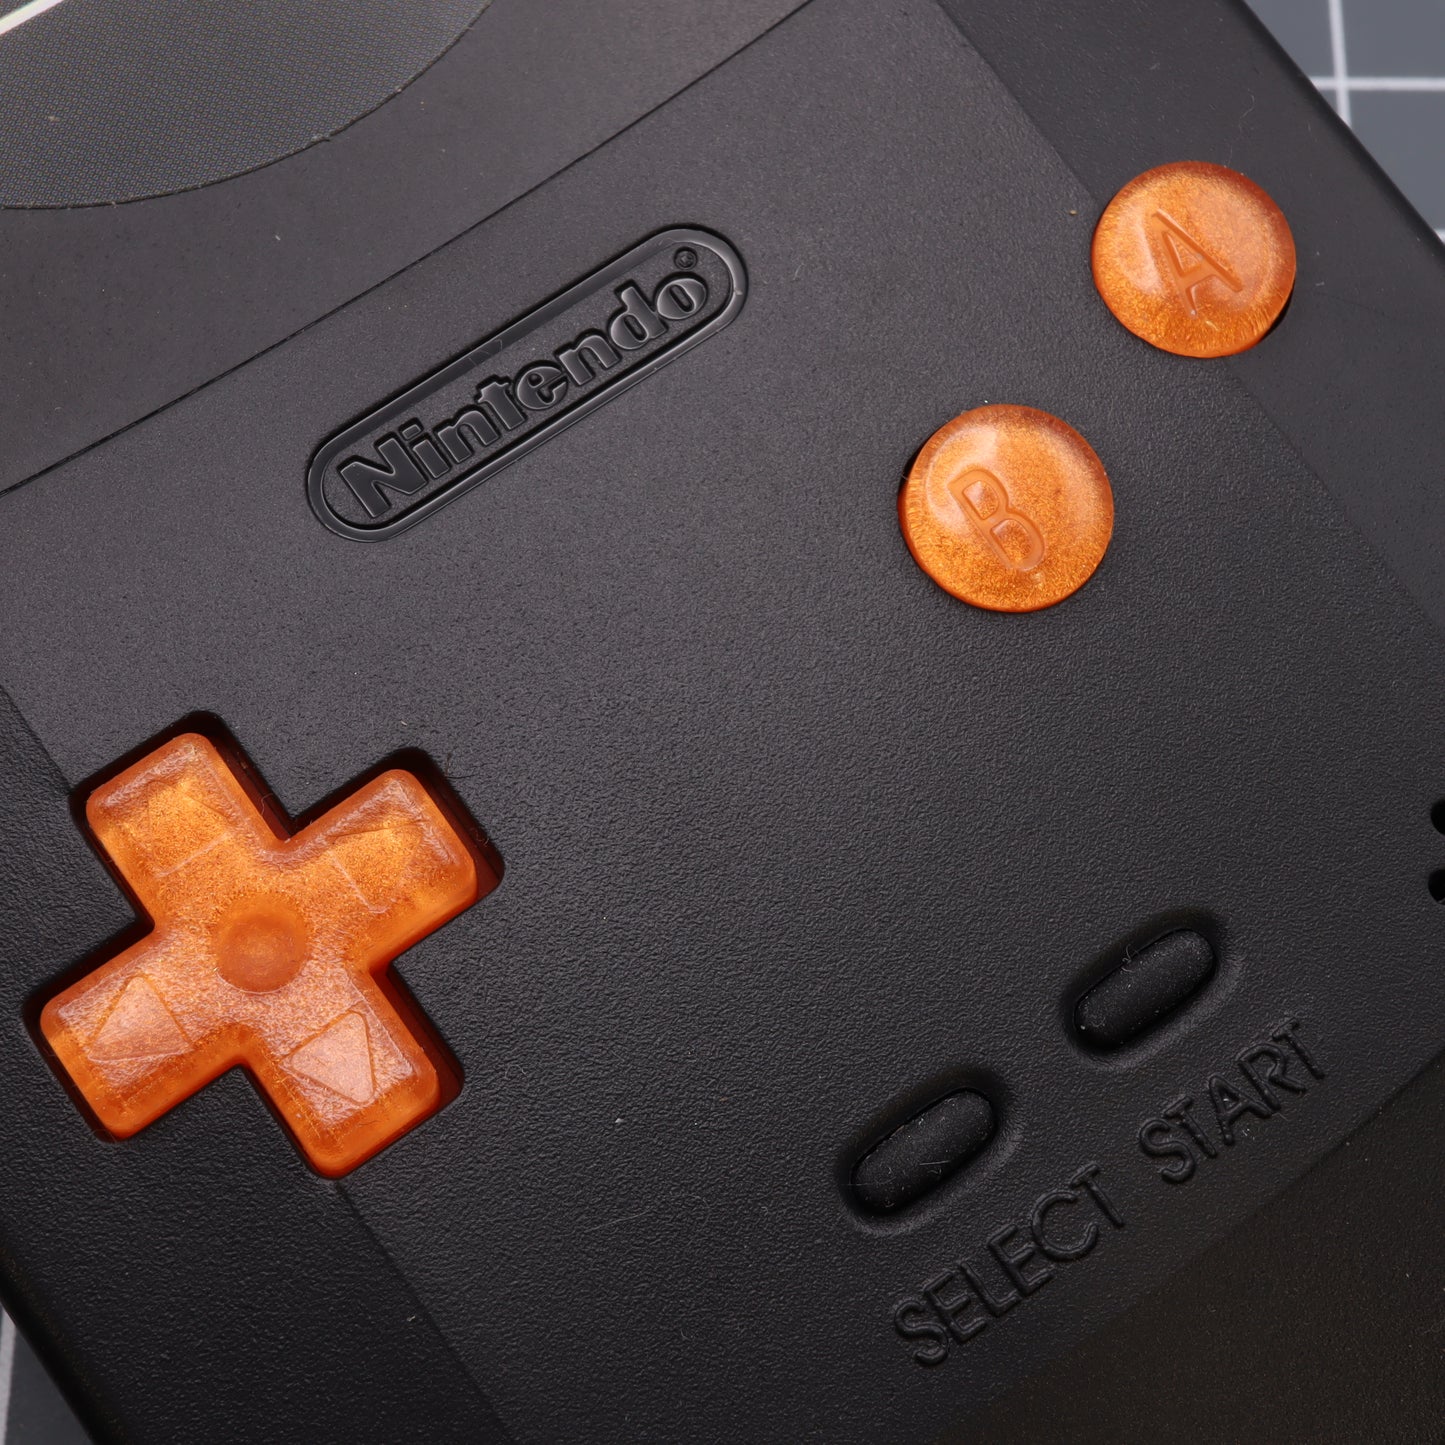 Game Boy Color - Custom Button - Orange Candy